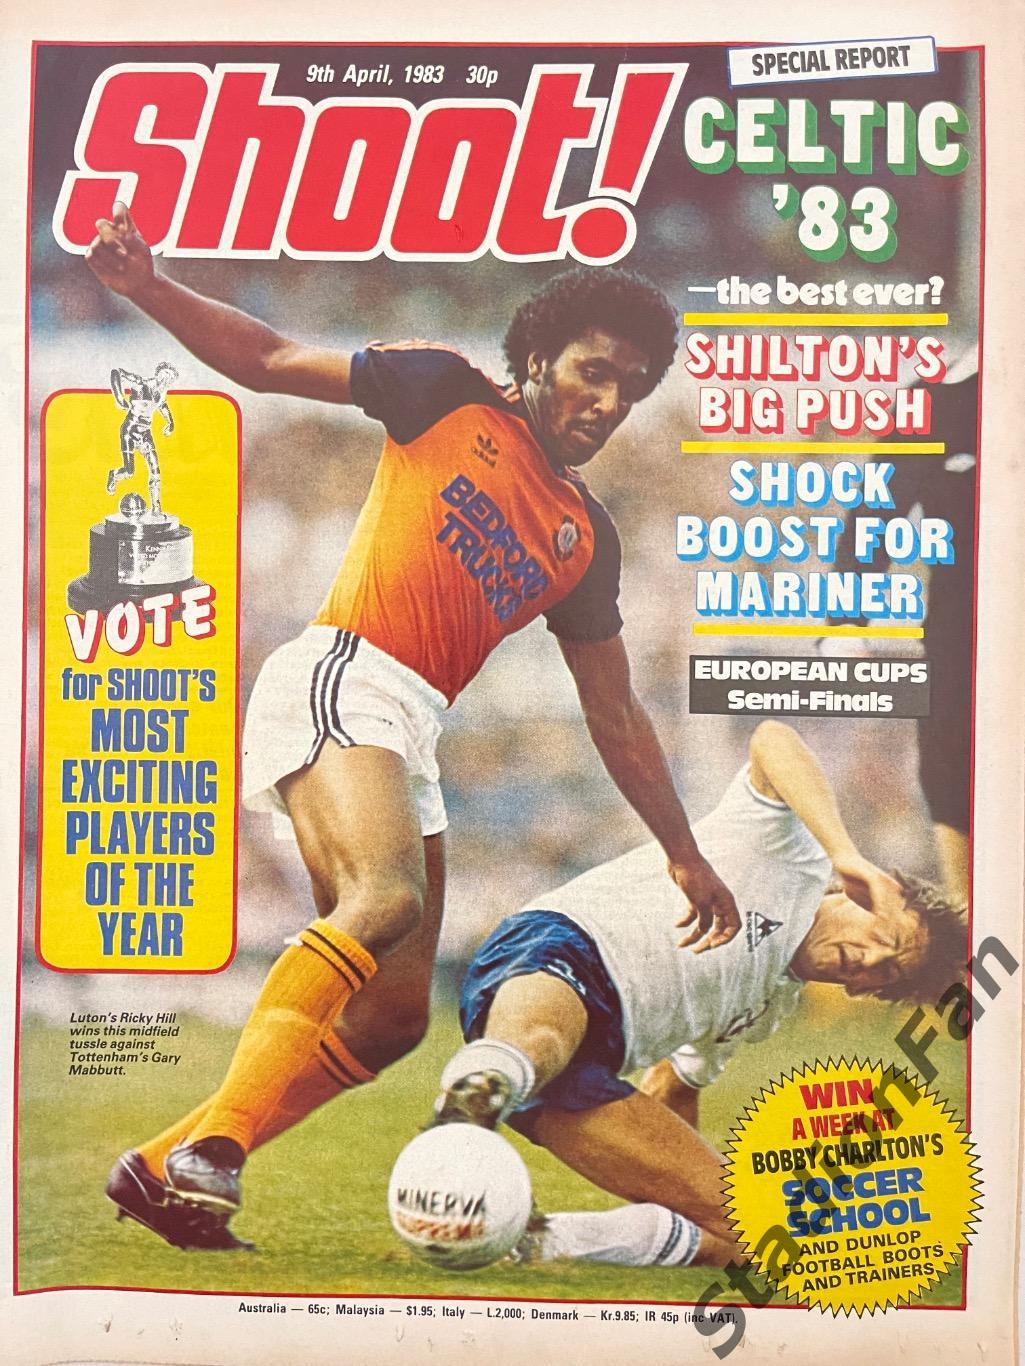 Журнал SHOOT! - 1983 год, 9 апреля.